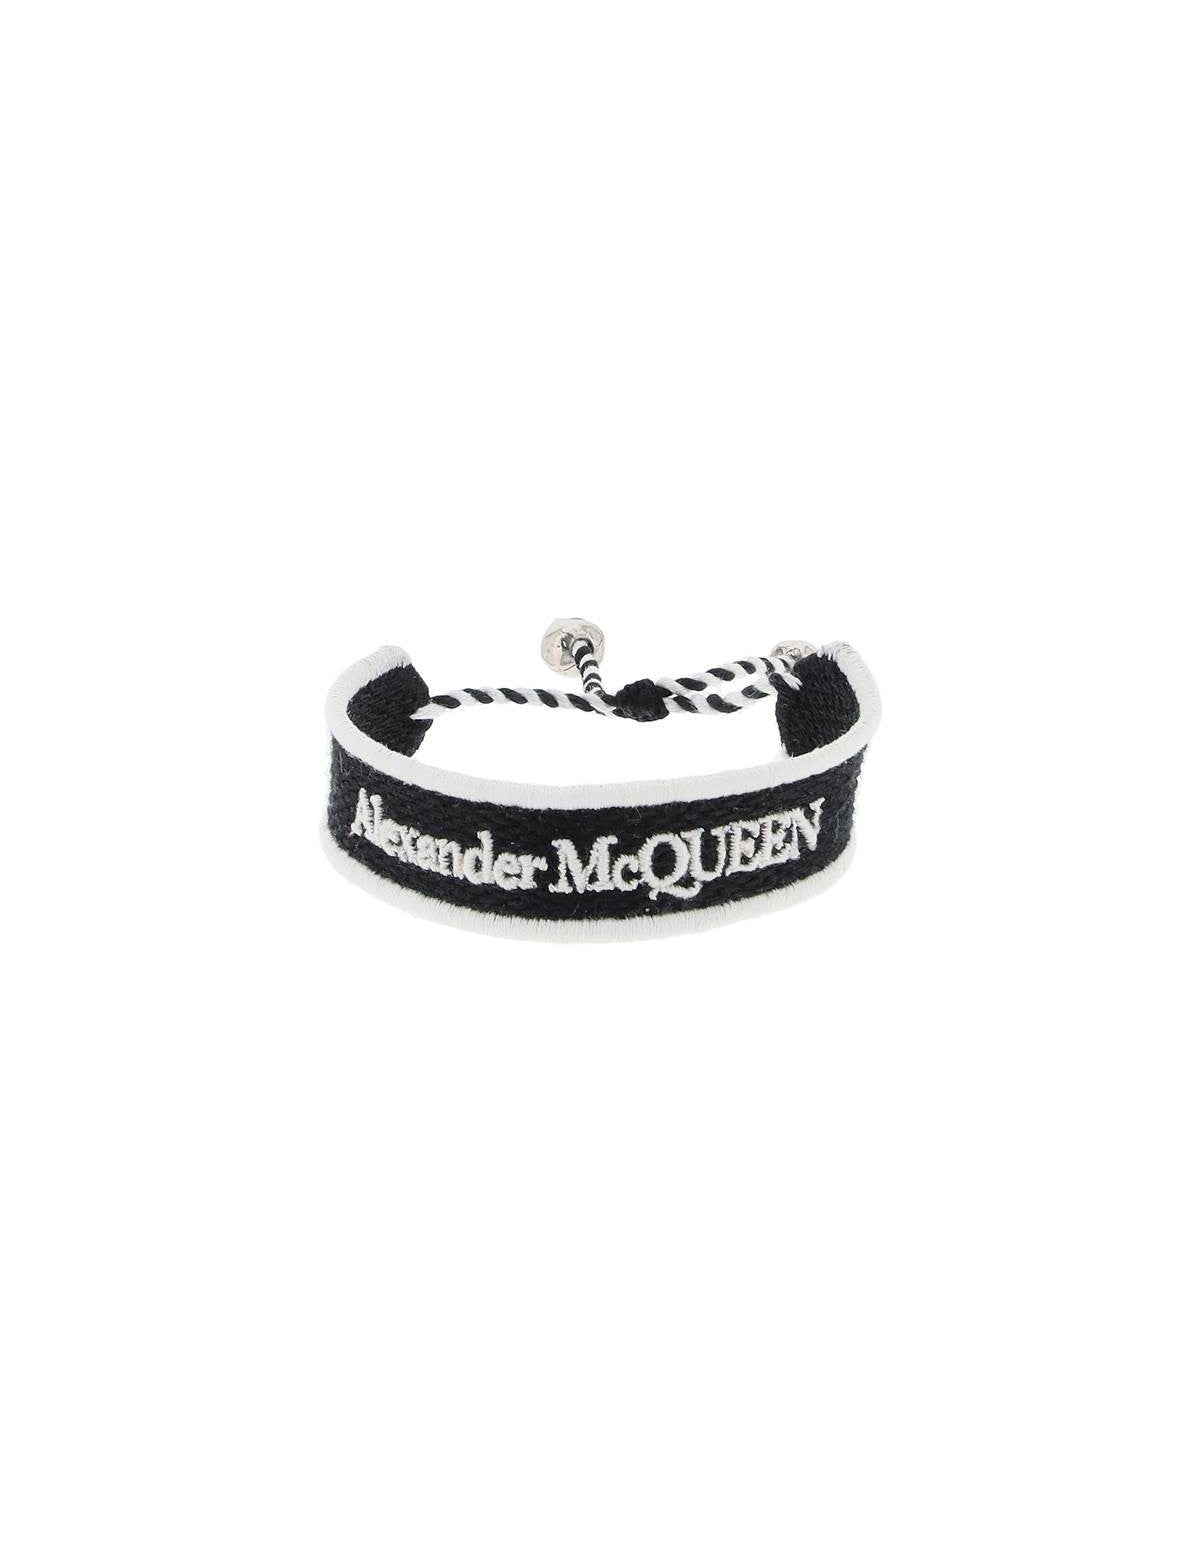 alexander-mcqueen-embroidered-bracelet_49b43b97-166e-4275-a901-830e4bc80e4a.jpg